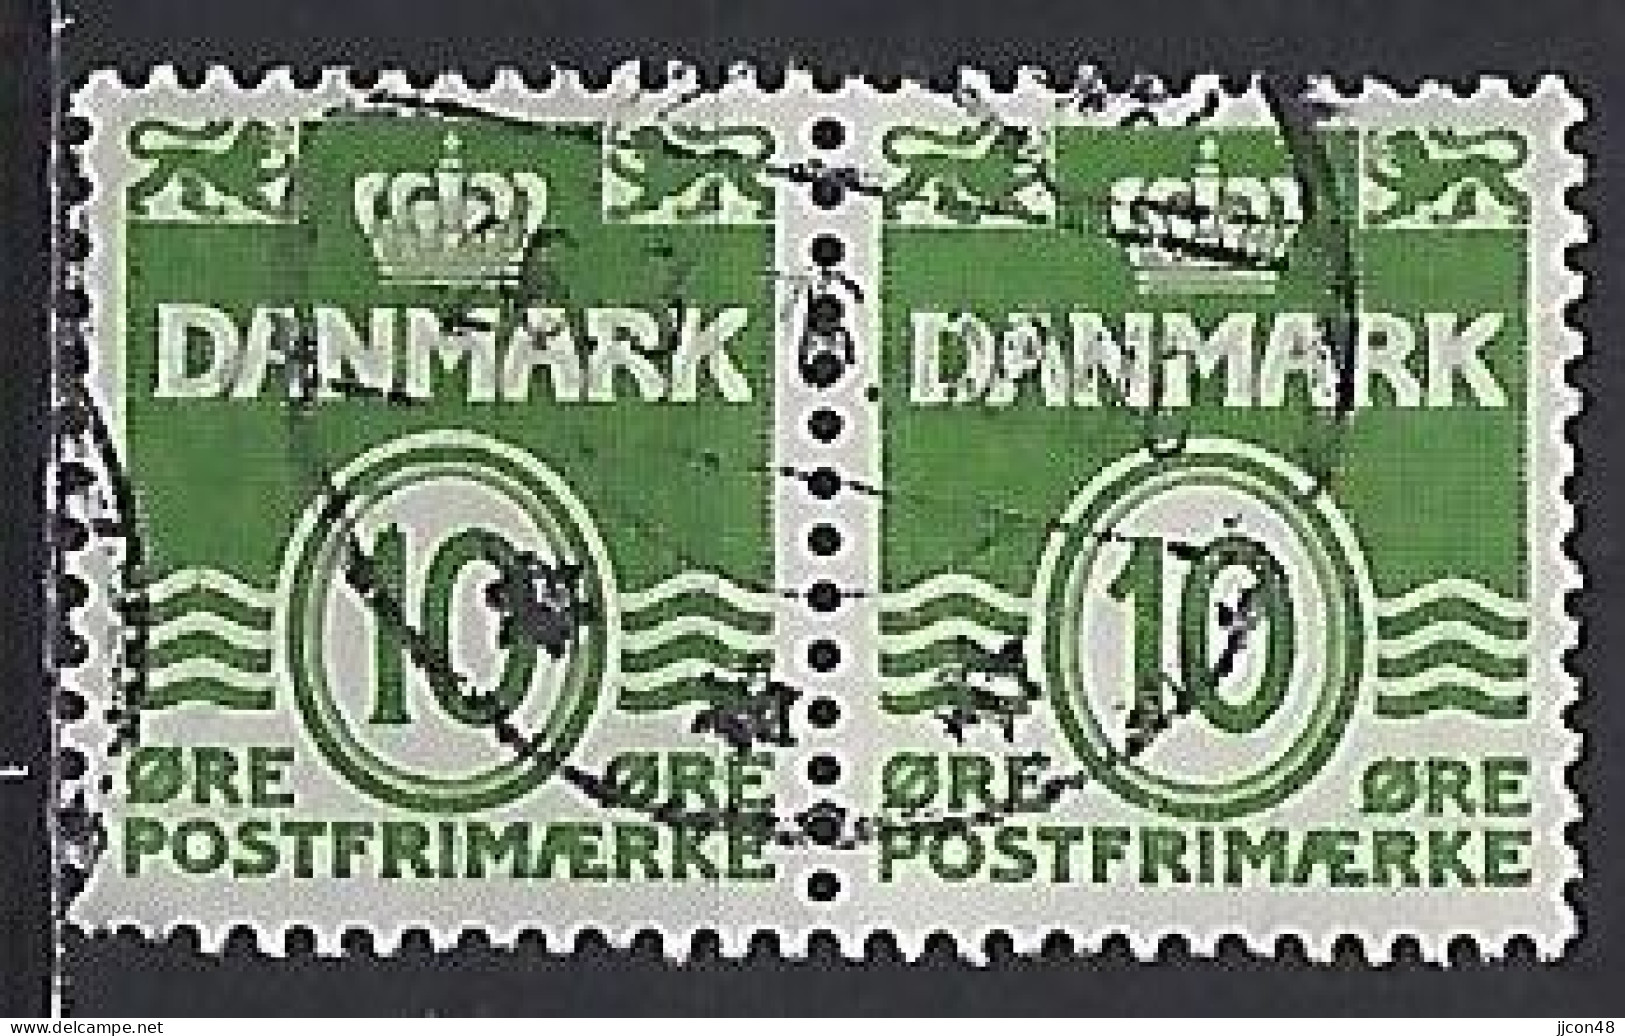 Denmark 1950-62  Wavy Lines (o) Mi.328 Y - Usati